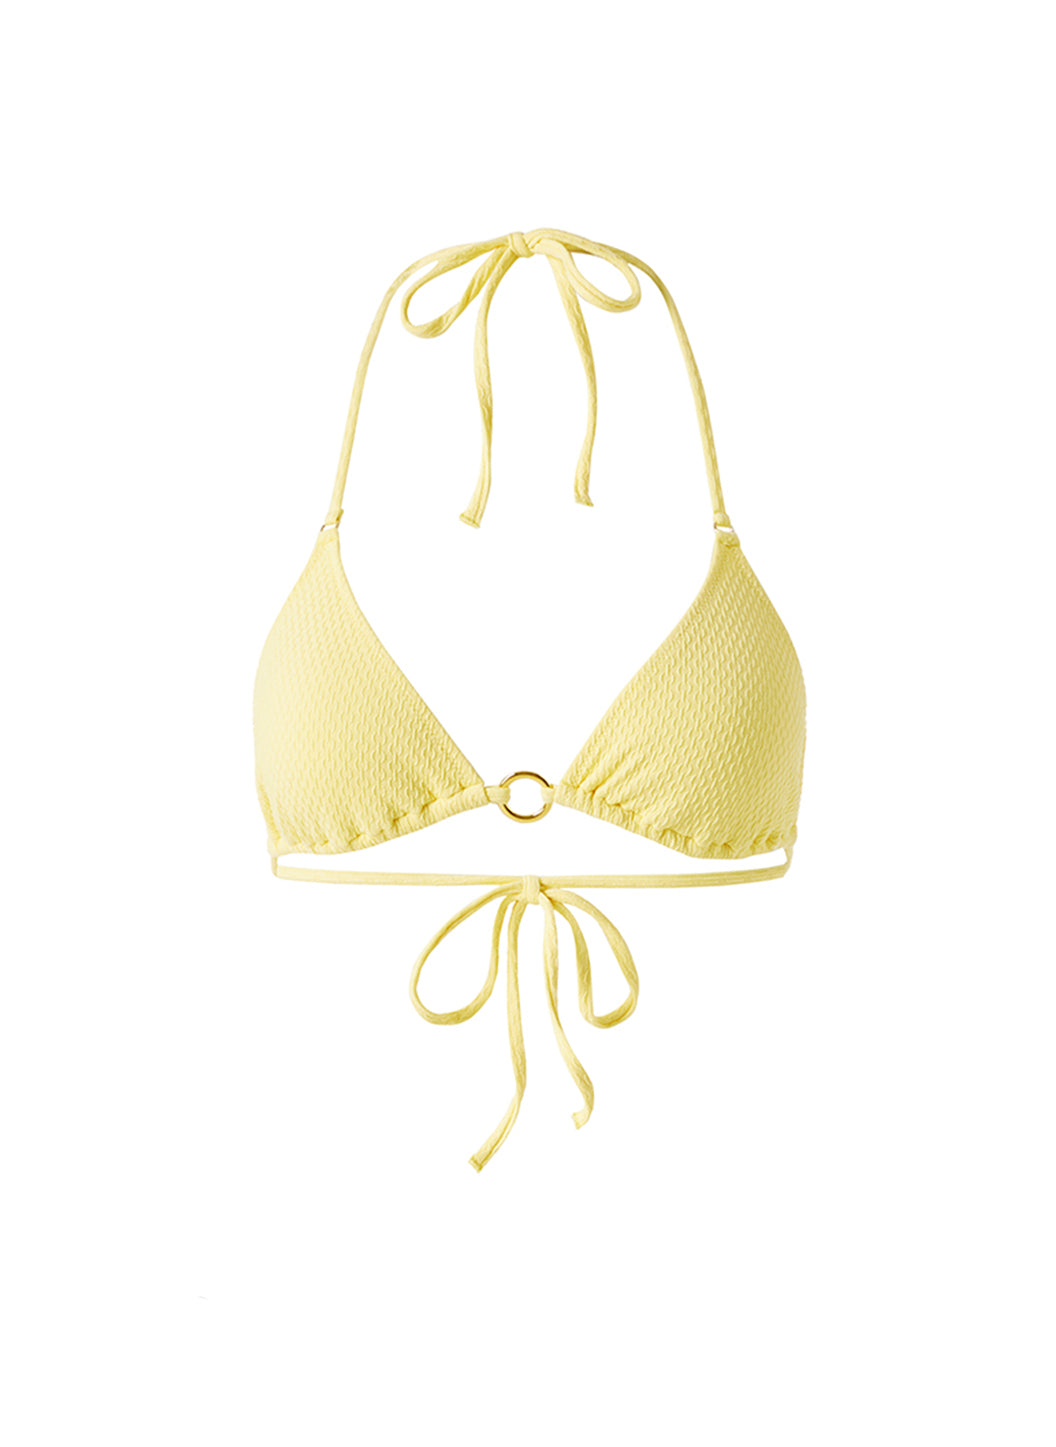 Bershka towelling backless bandeau bikini top in yellow - part of a set